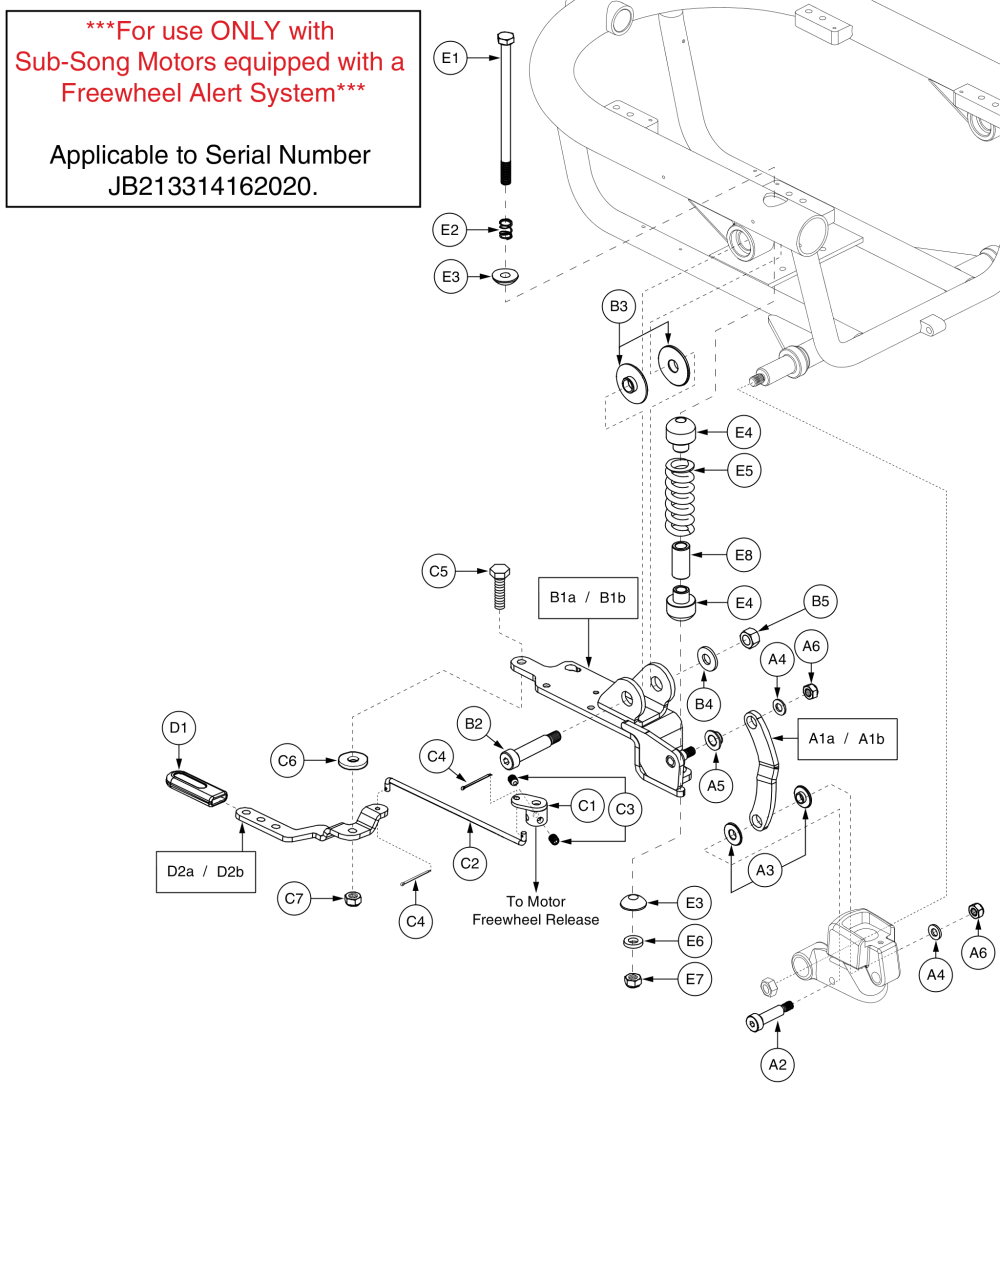 Motor Mount And Freewheel, Sub-song Motors W/ Microswitch - J6 Va parts diagram